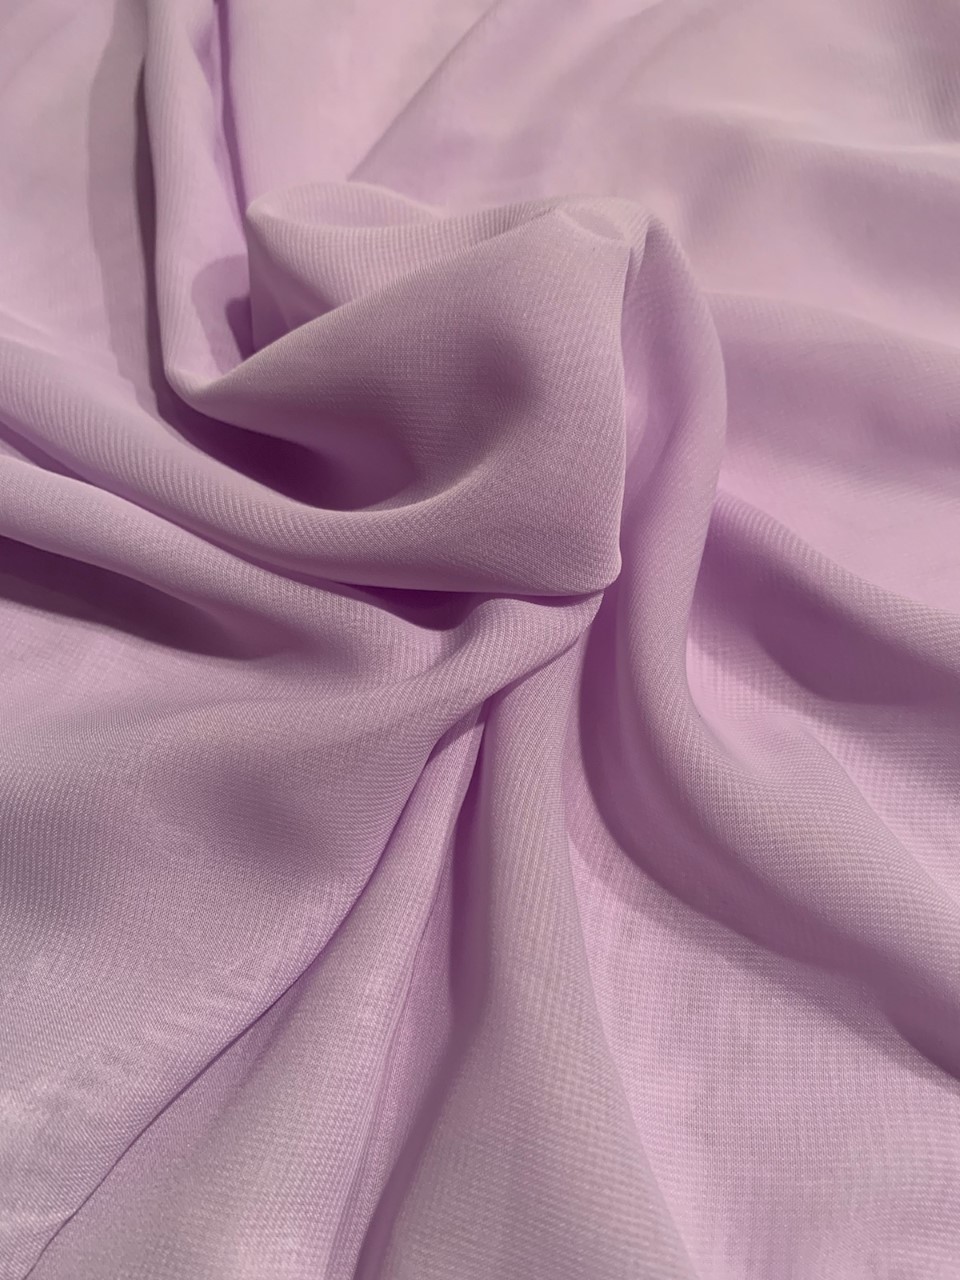 58" Lilac Chiffon Fabric By The Yard - Polyester